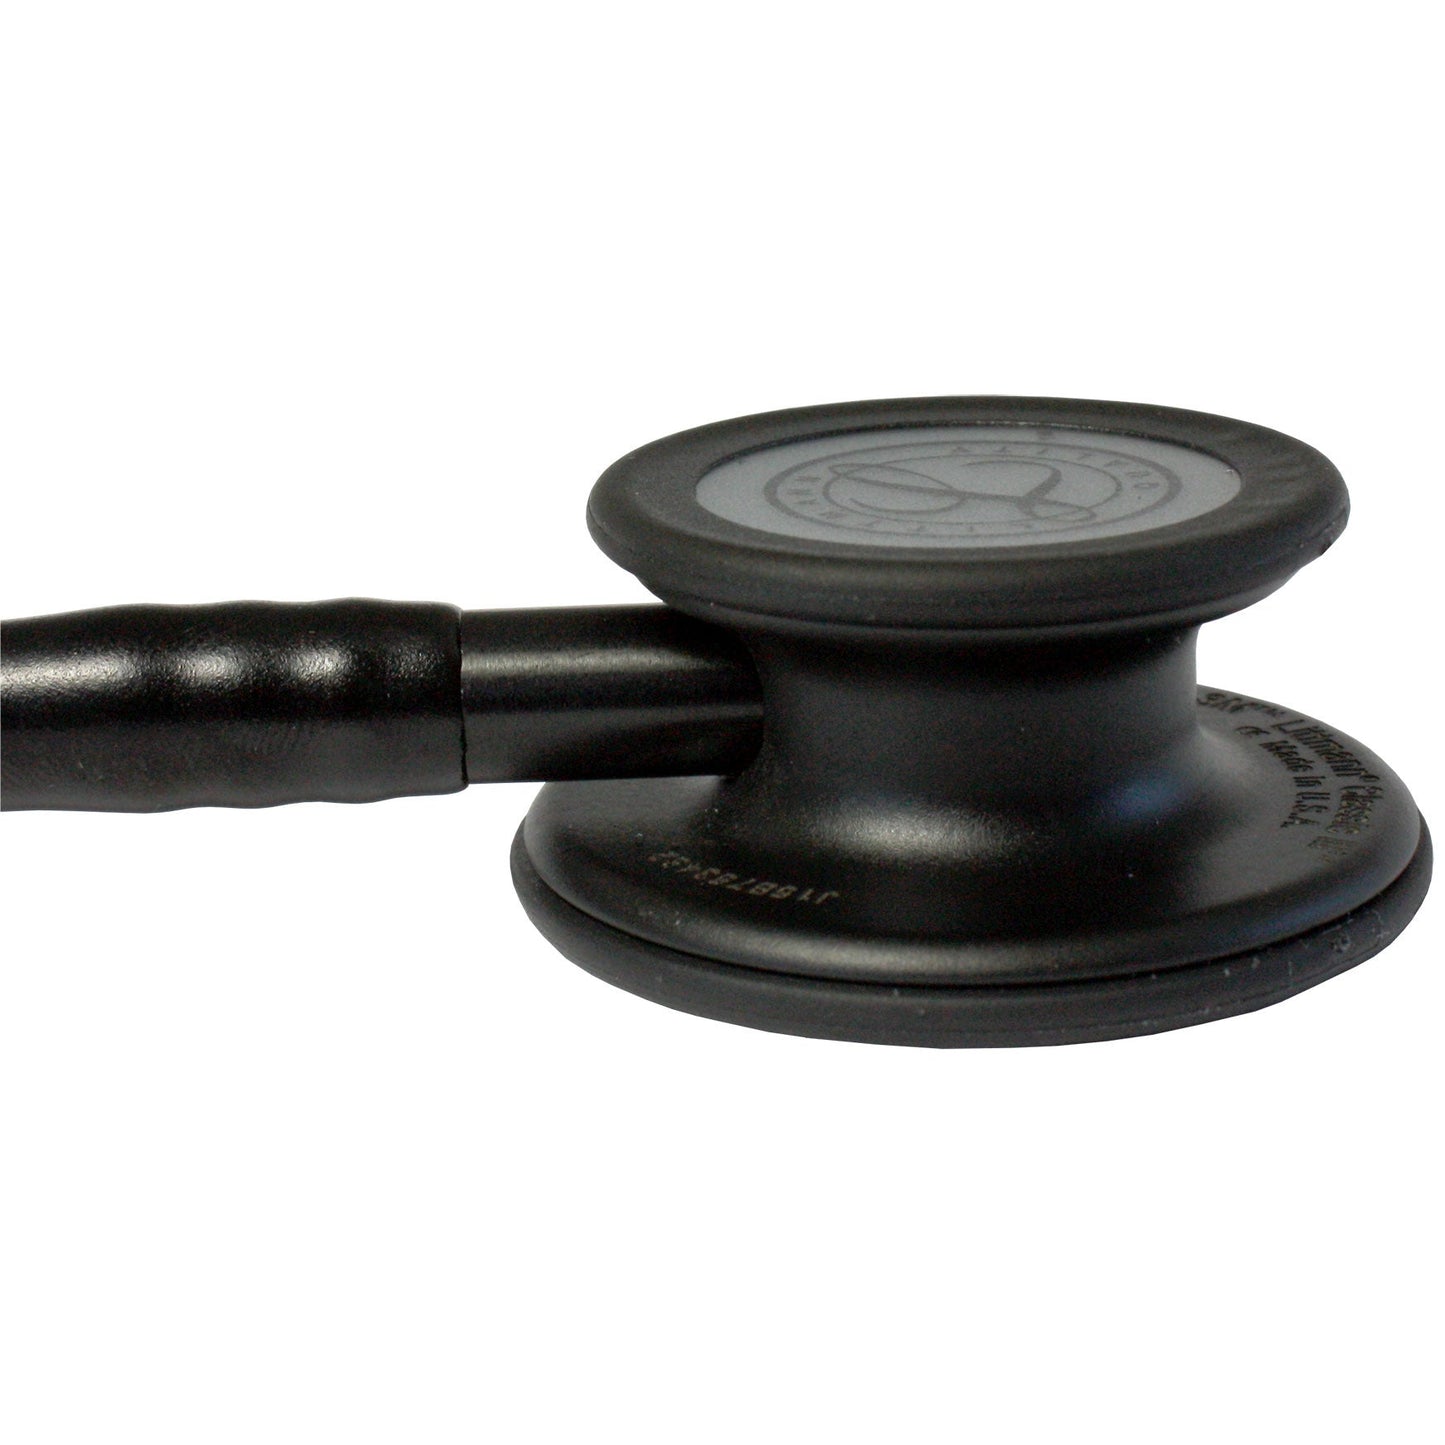 Littmann Classic III Stethoscope: All Black 5803